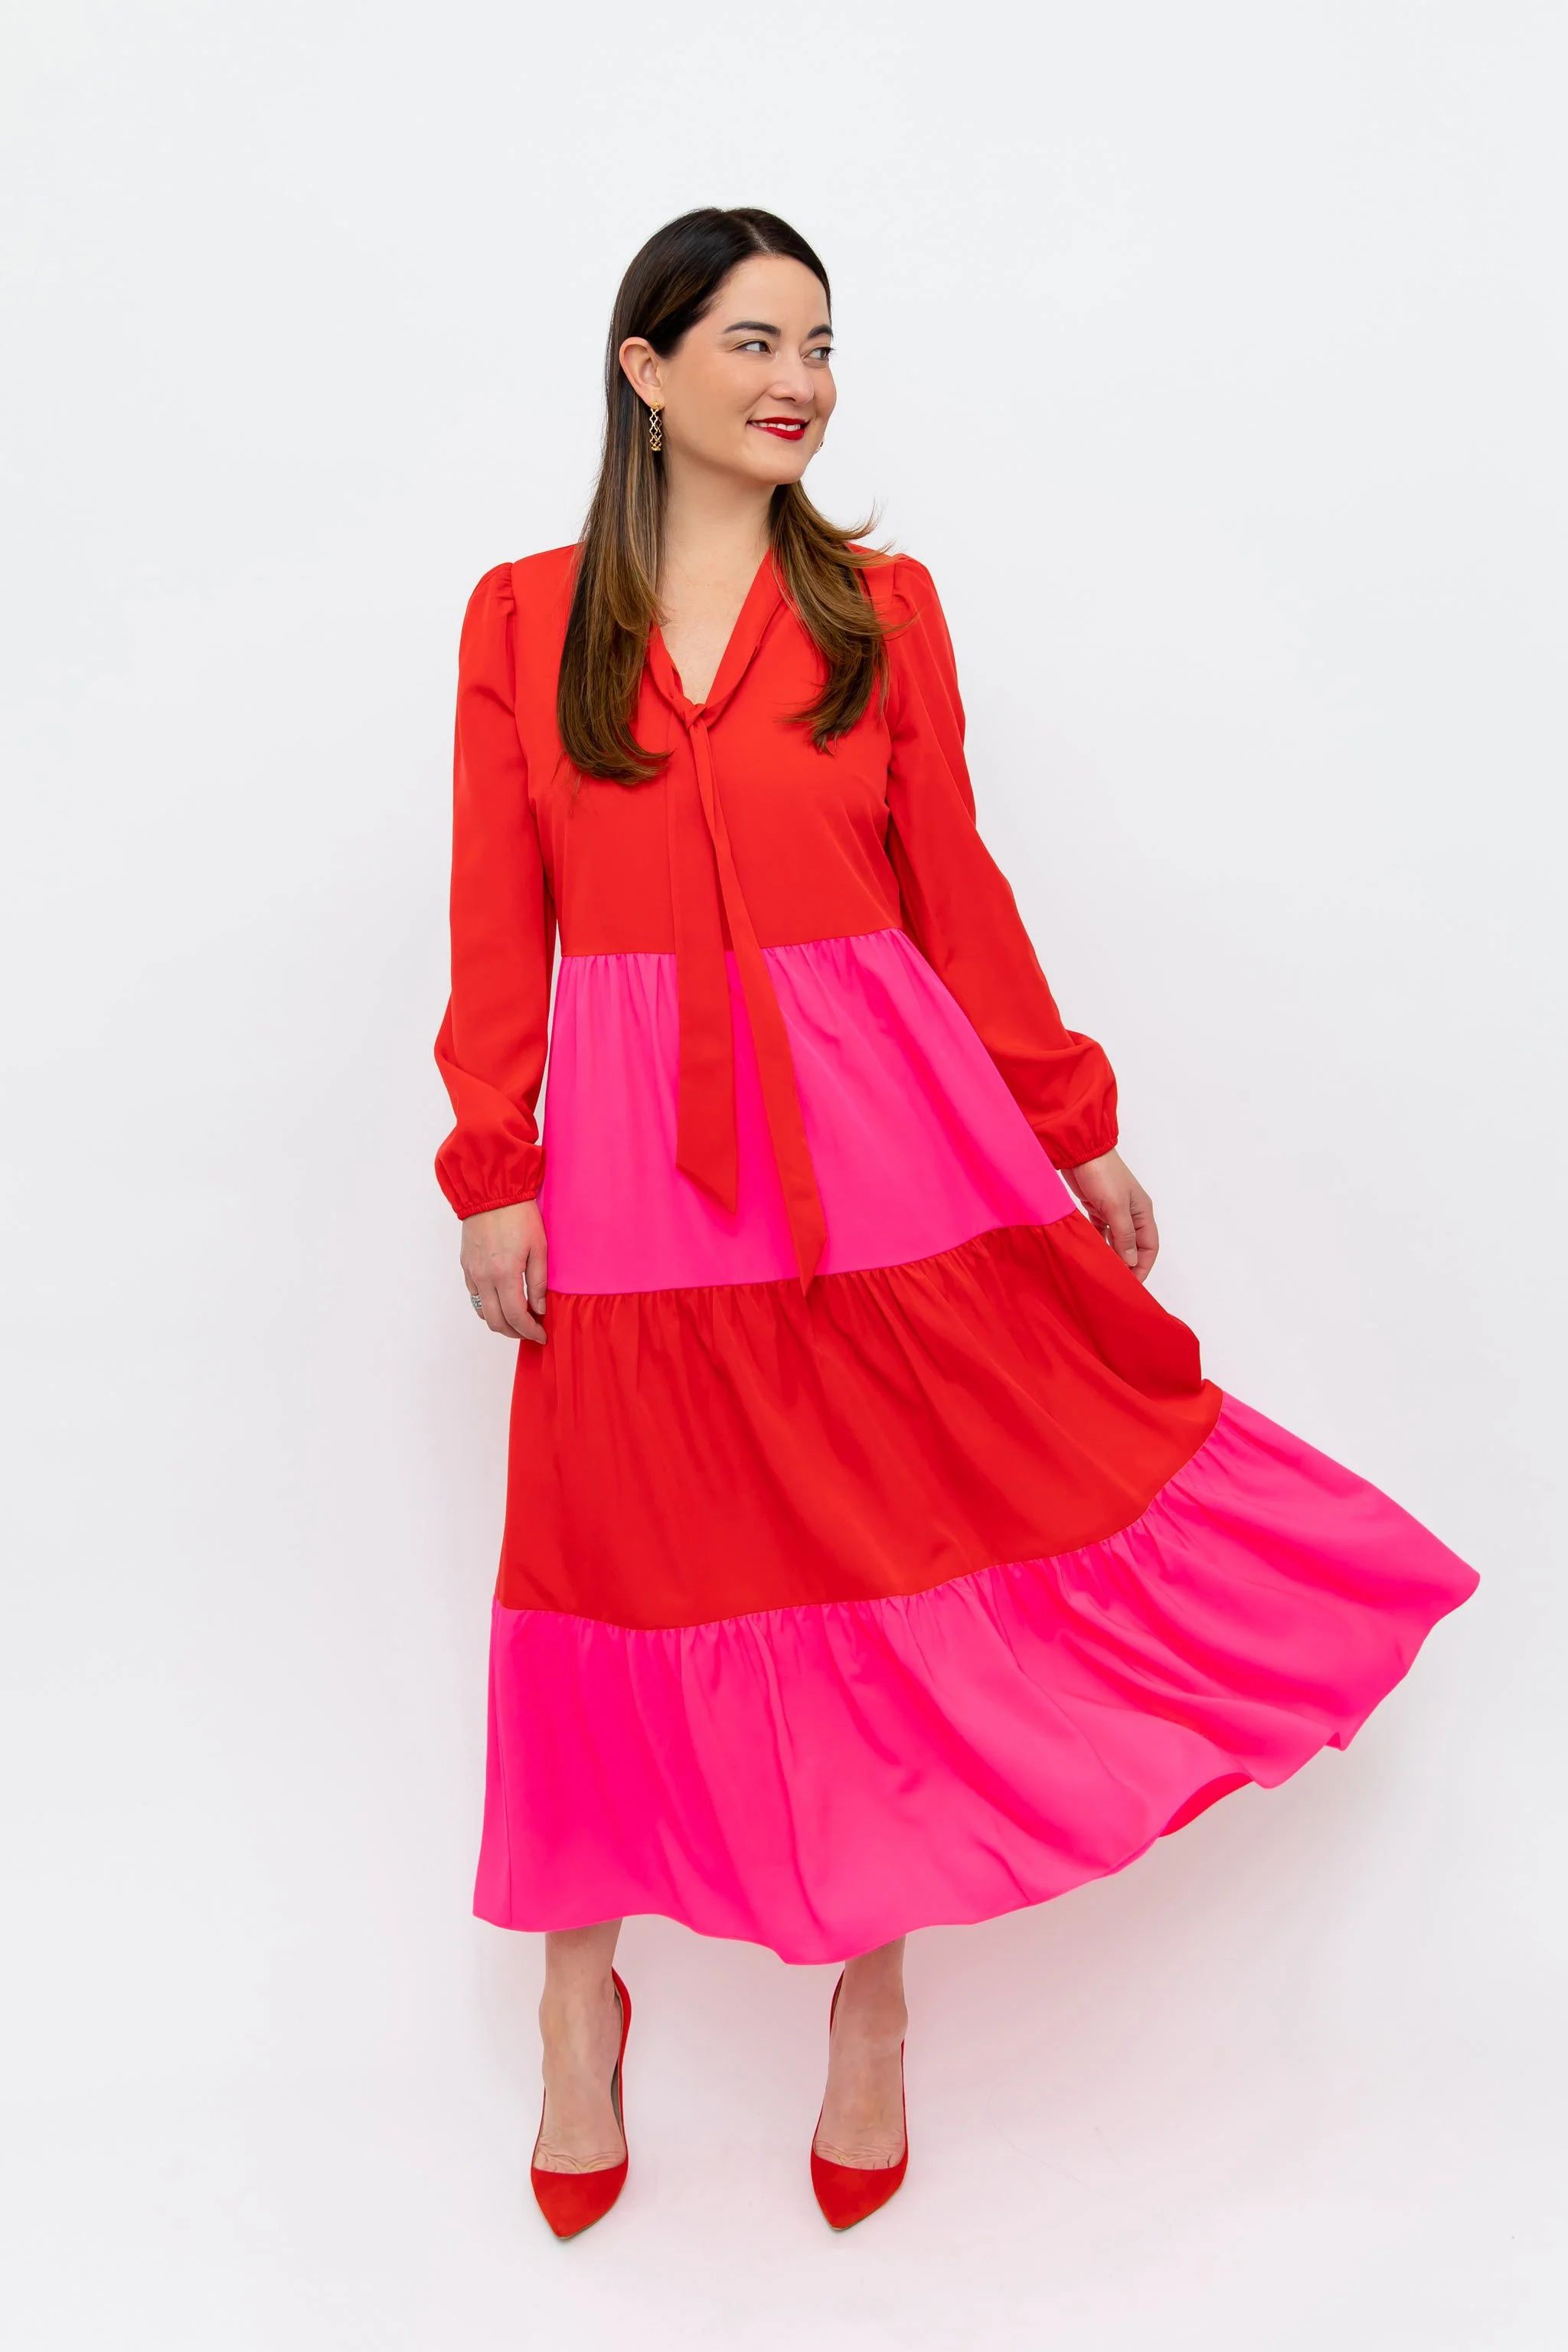 Anne Color-block dress | Sail to Sable